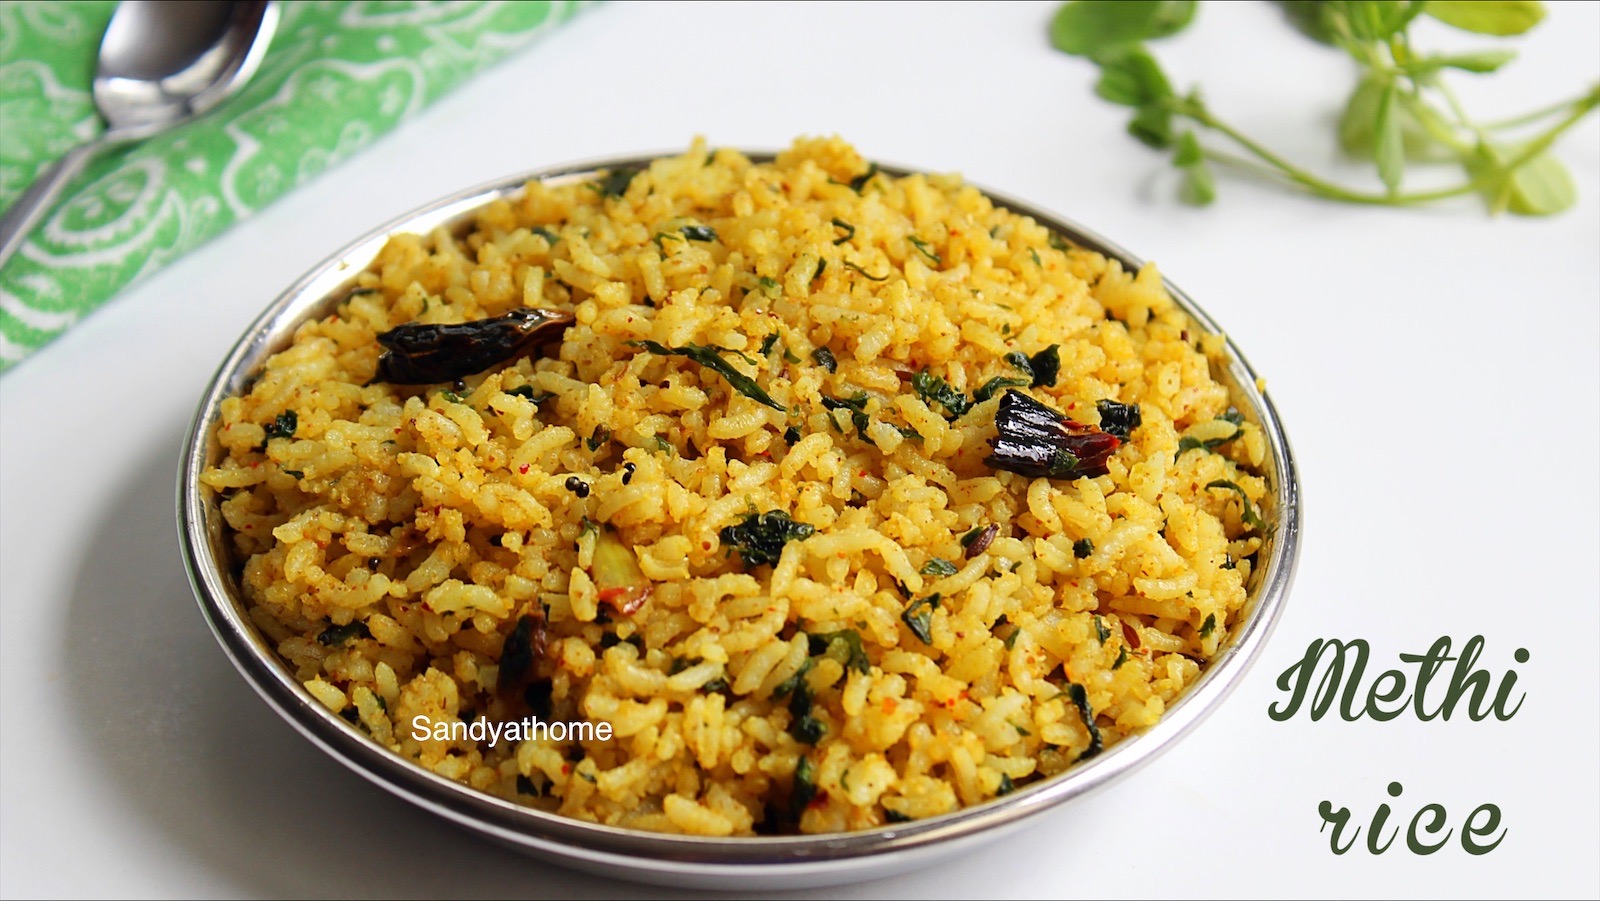 Methi rice recipe, Vendhaya keerai sadam